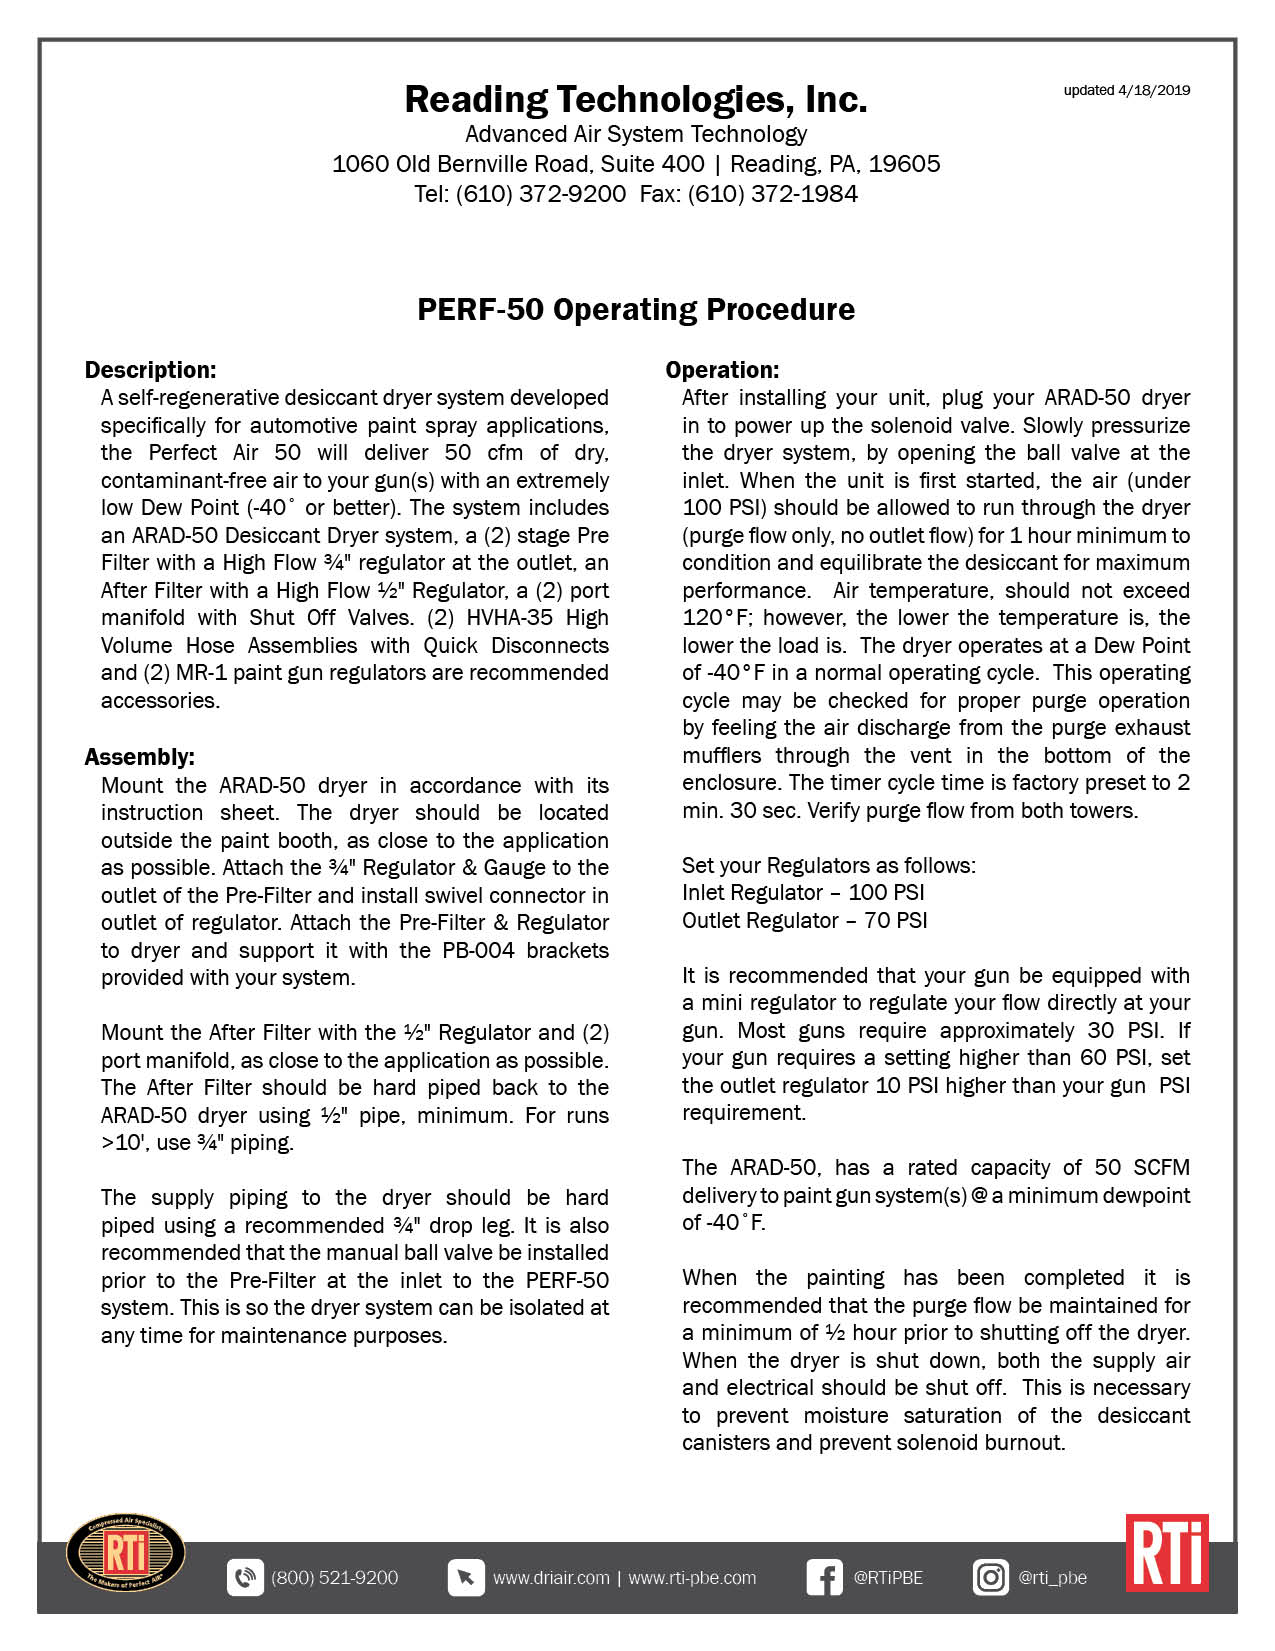 PERF-50 Operating Procedure